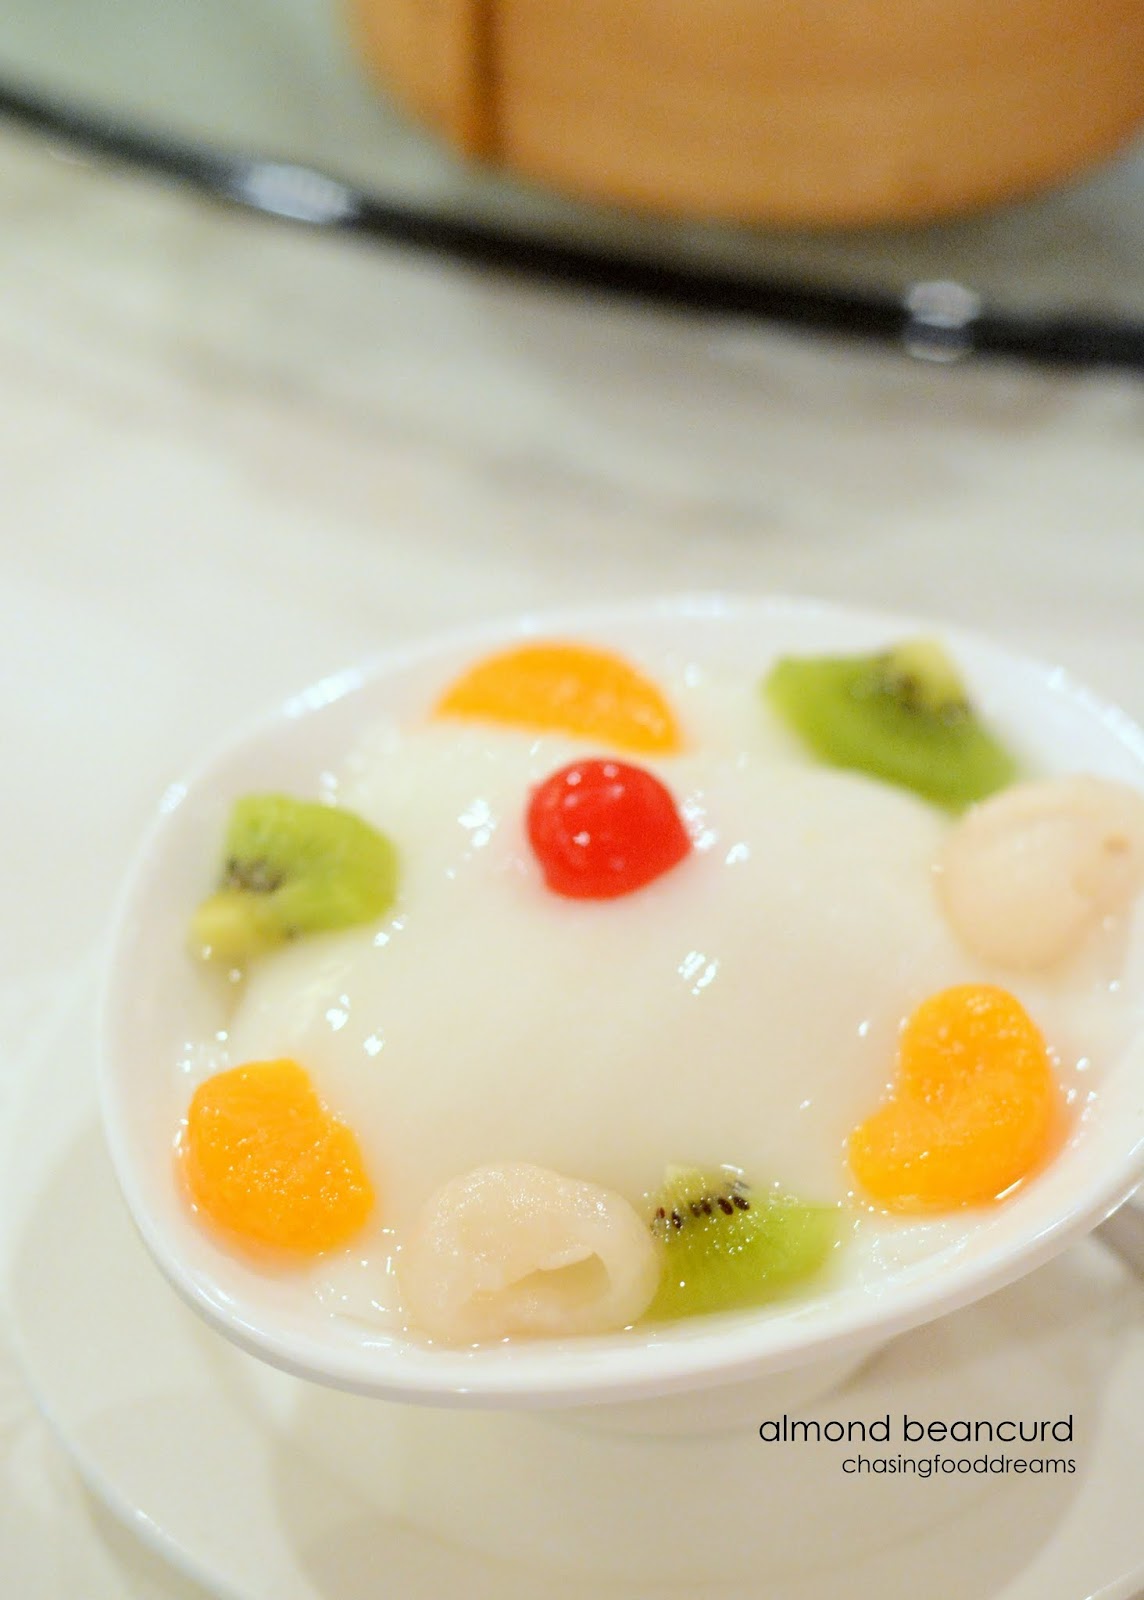 CHASING FOOD DREAMS: Dim Sum @ Xin Cuisine, Concorde Hotel Kuala Lumpur